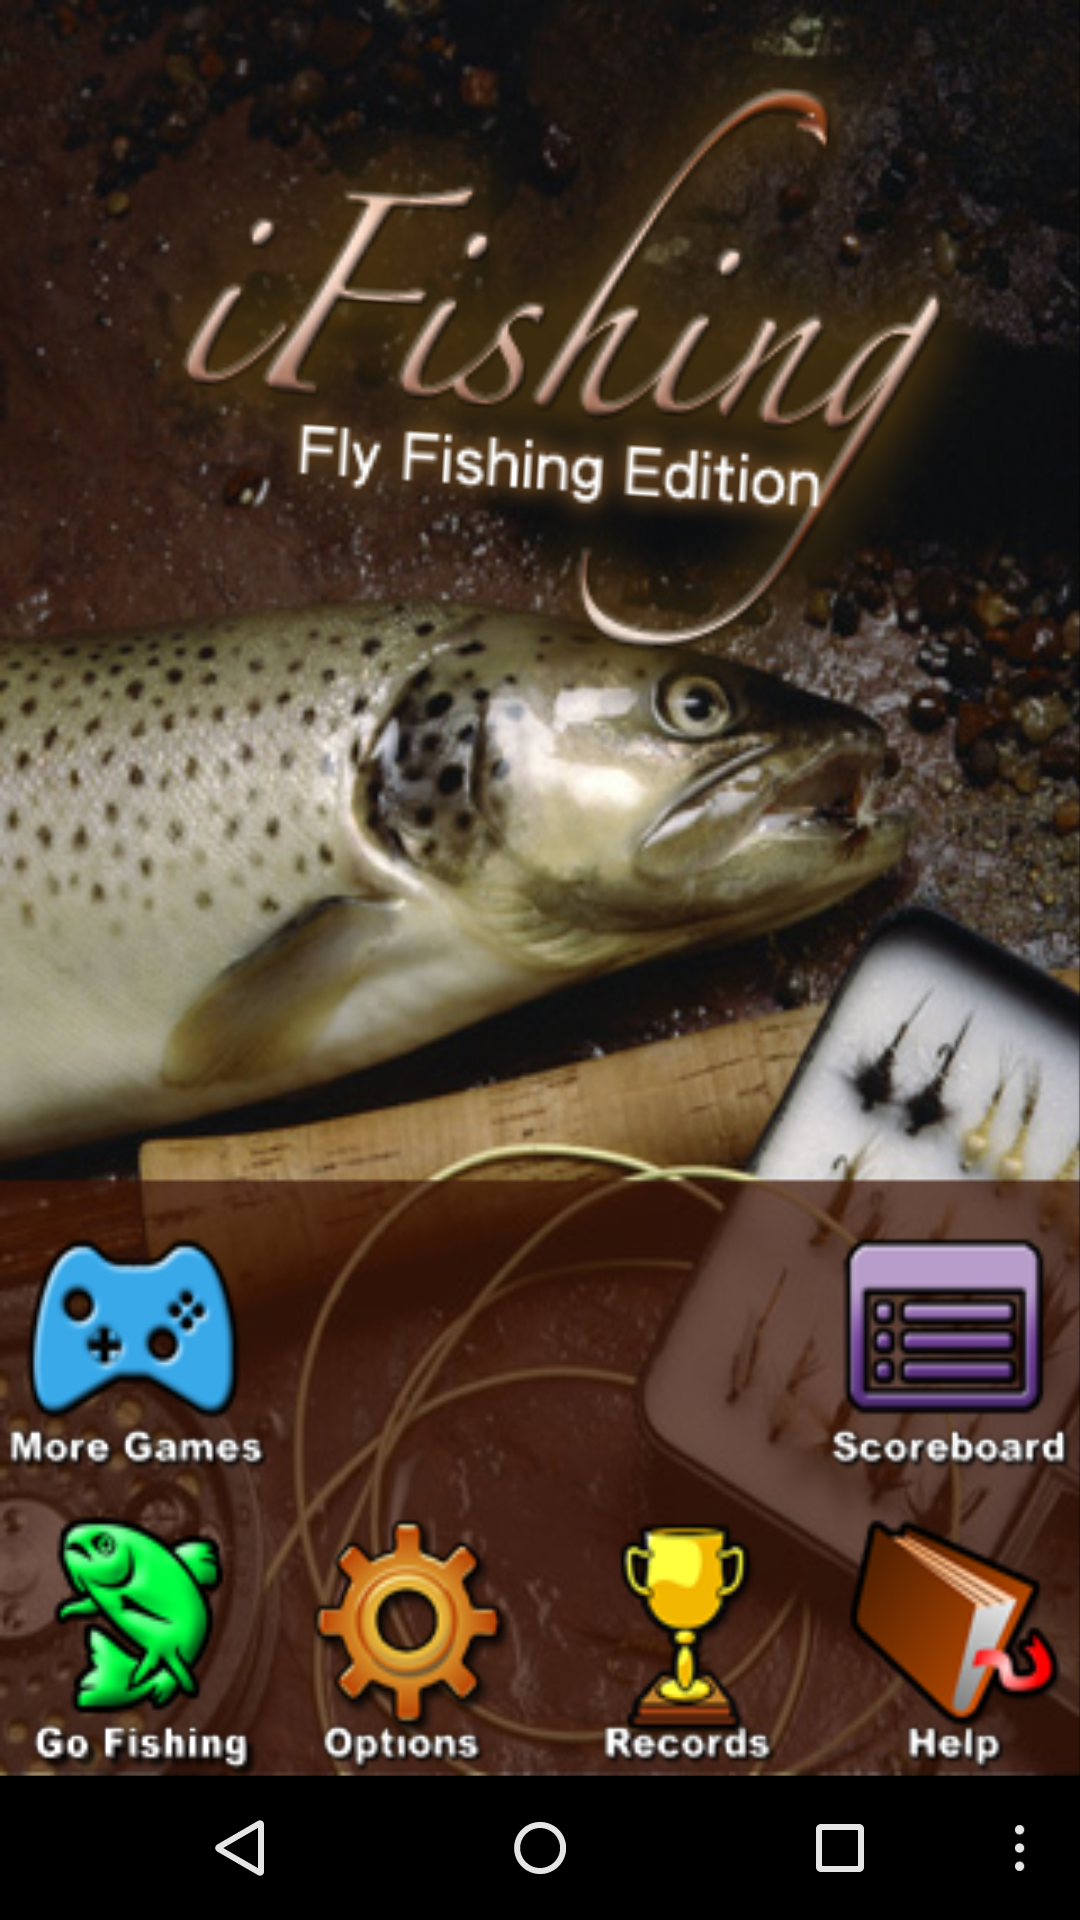 Android application i Fishing Fly Fishing screenshort